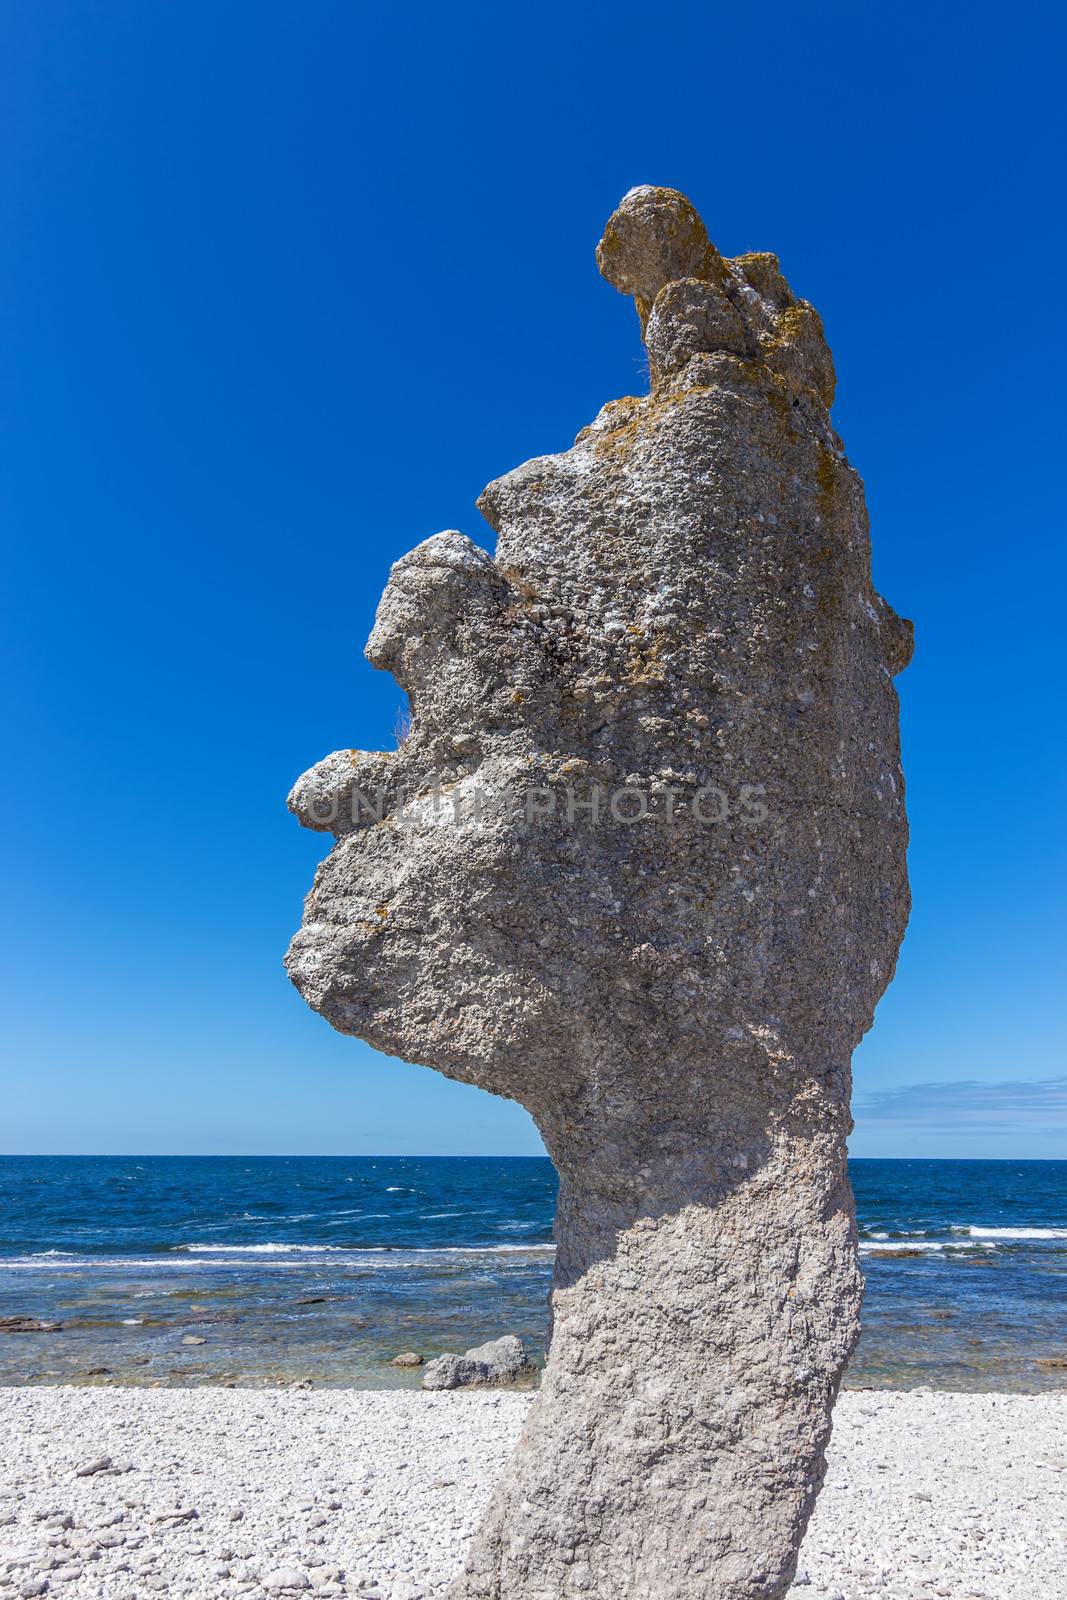 Limestone formation (rauk) on Fårö island in Gotland, Sweden. Baltic Sea coastline.